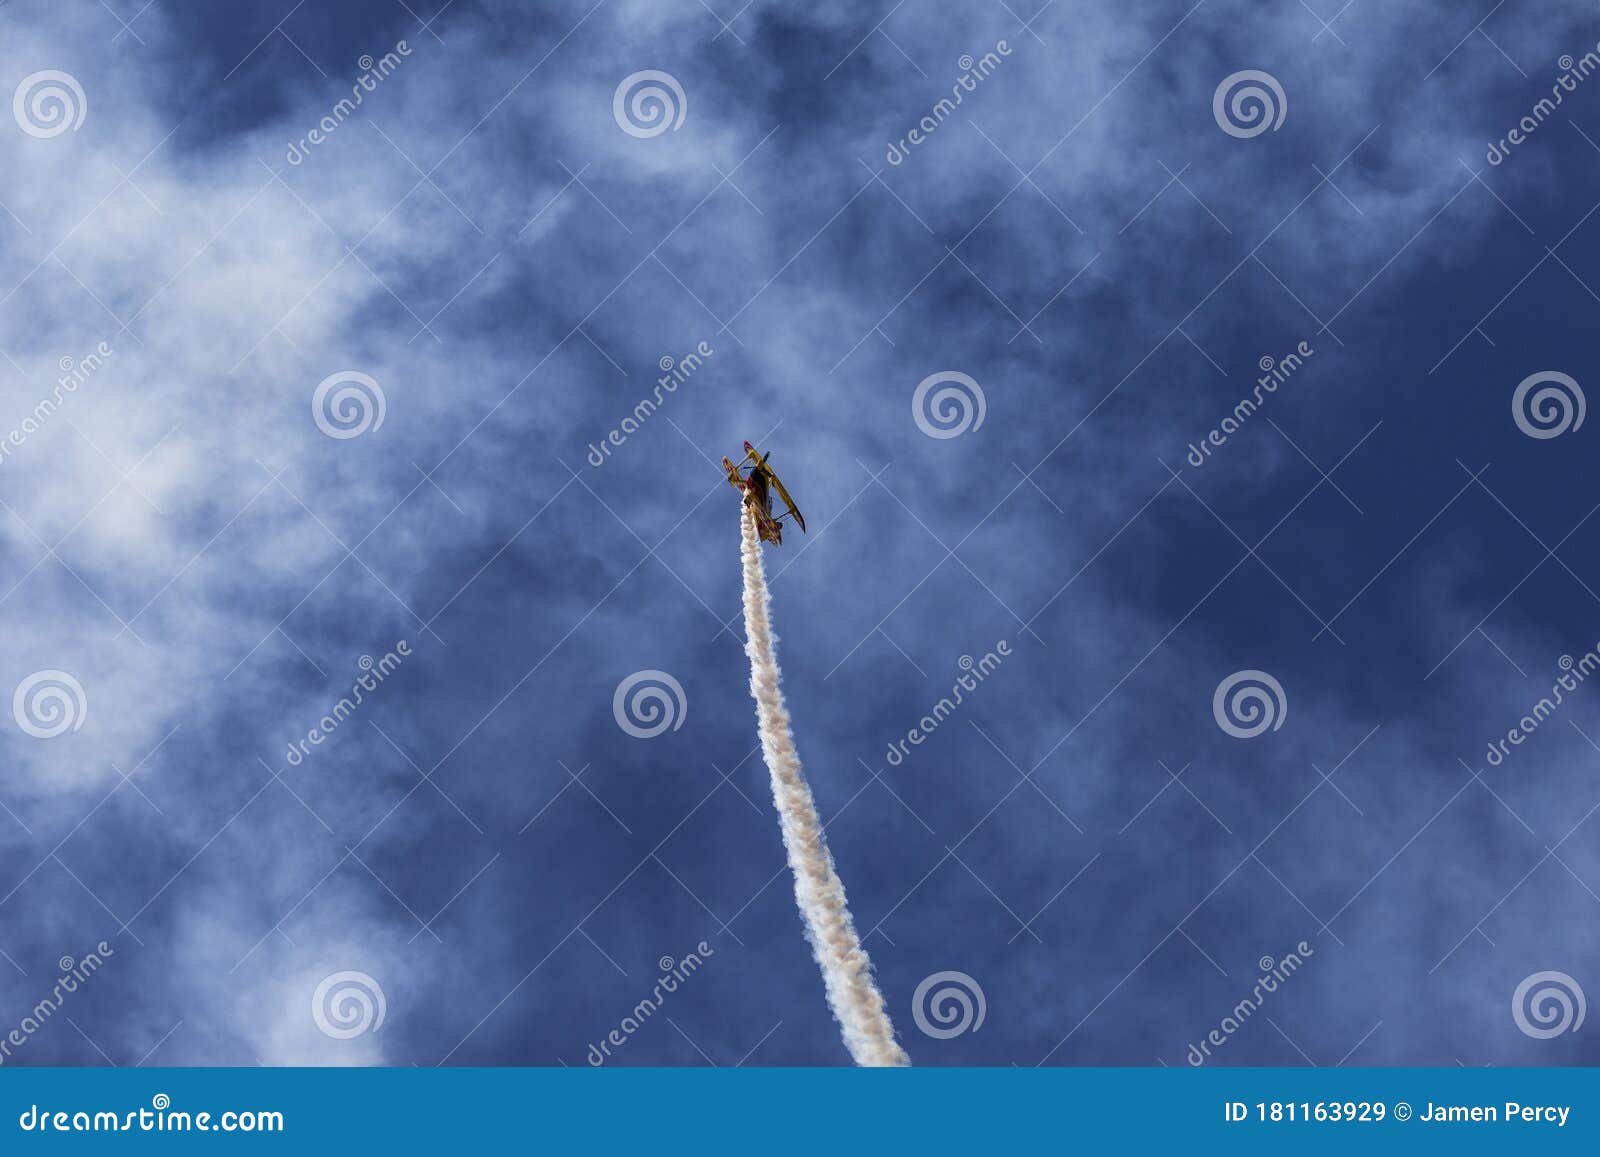 skyaces plane performing aerobatics with a smoke trail